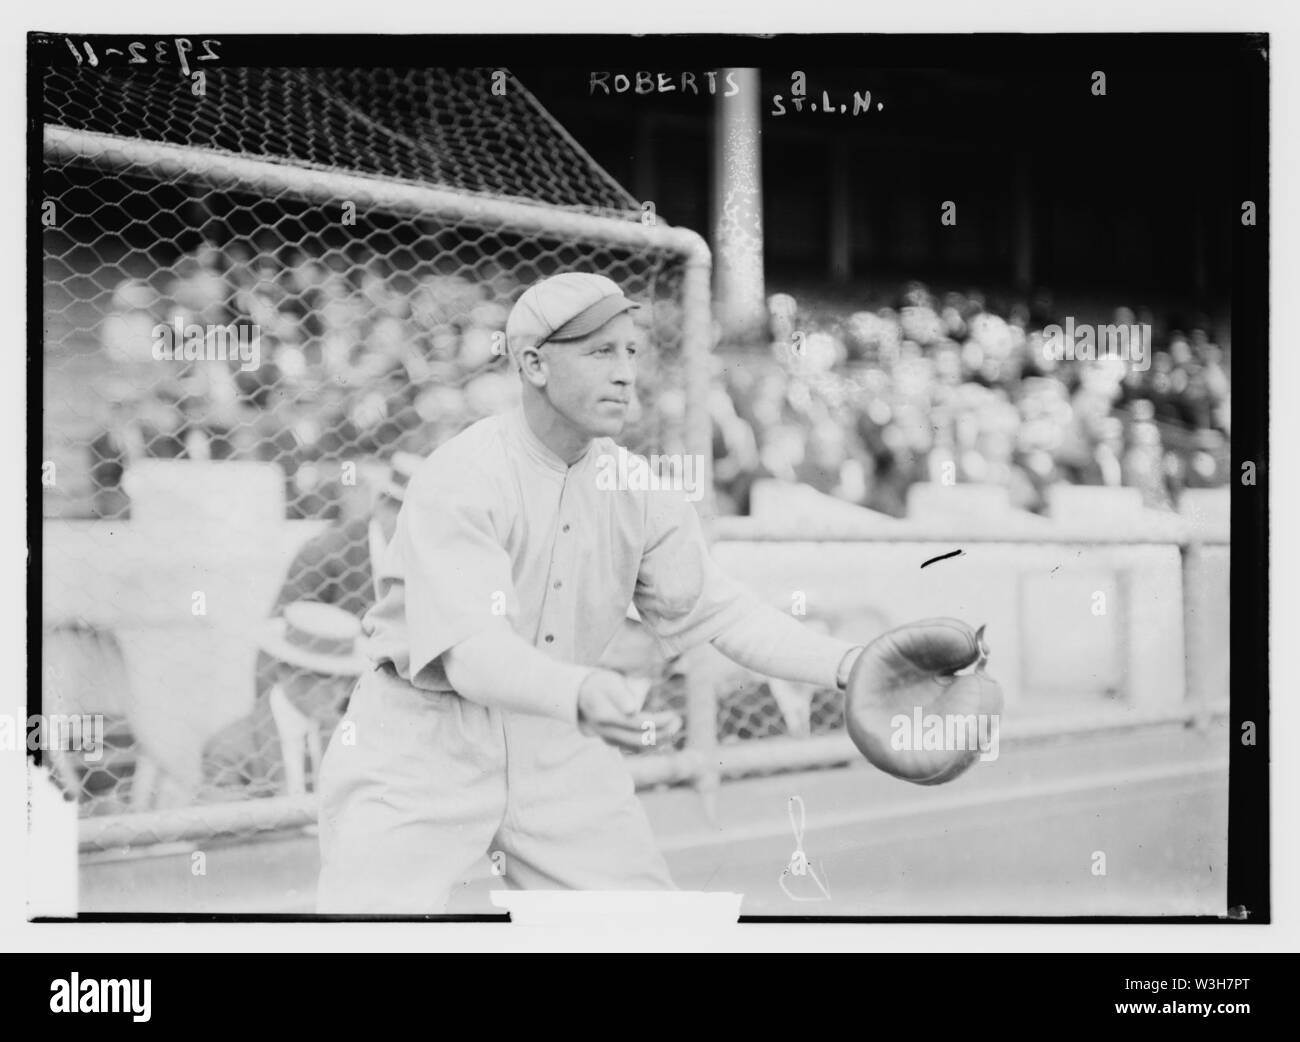 Clarence 'Skipper' Roberts, Saint Louis NL (baseball) Banque D'Images